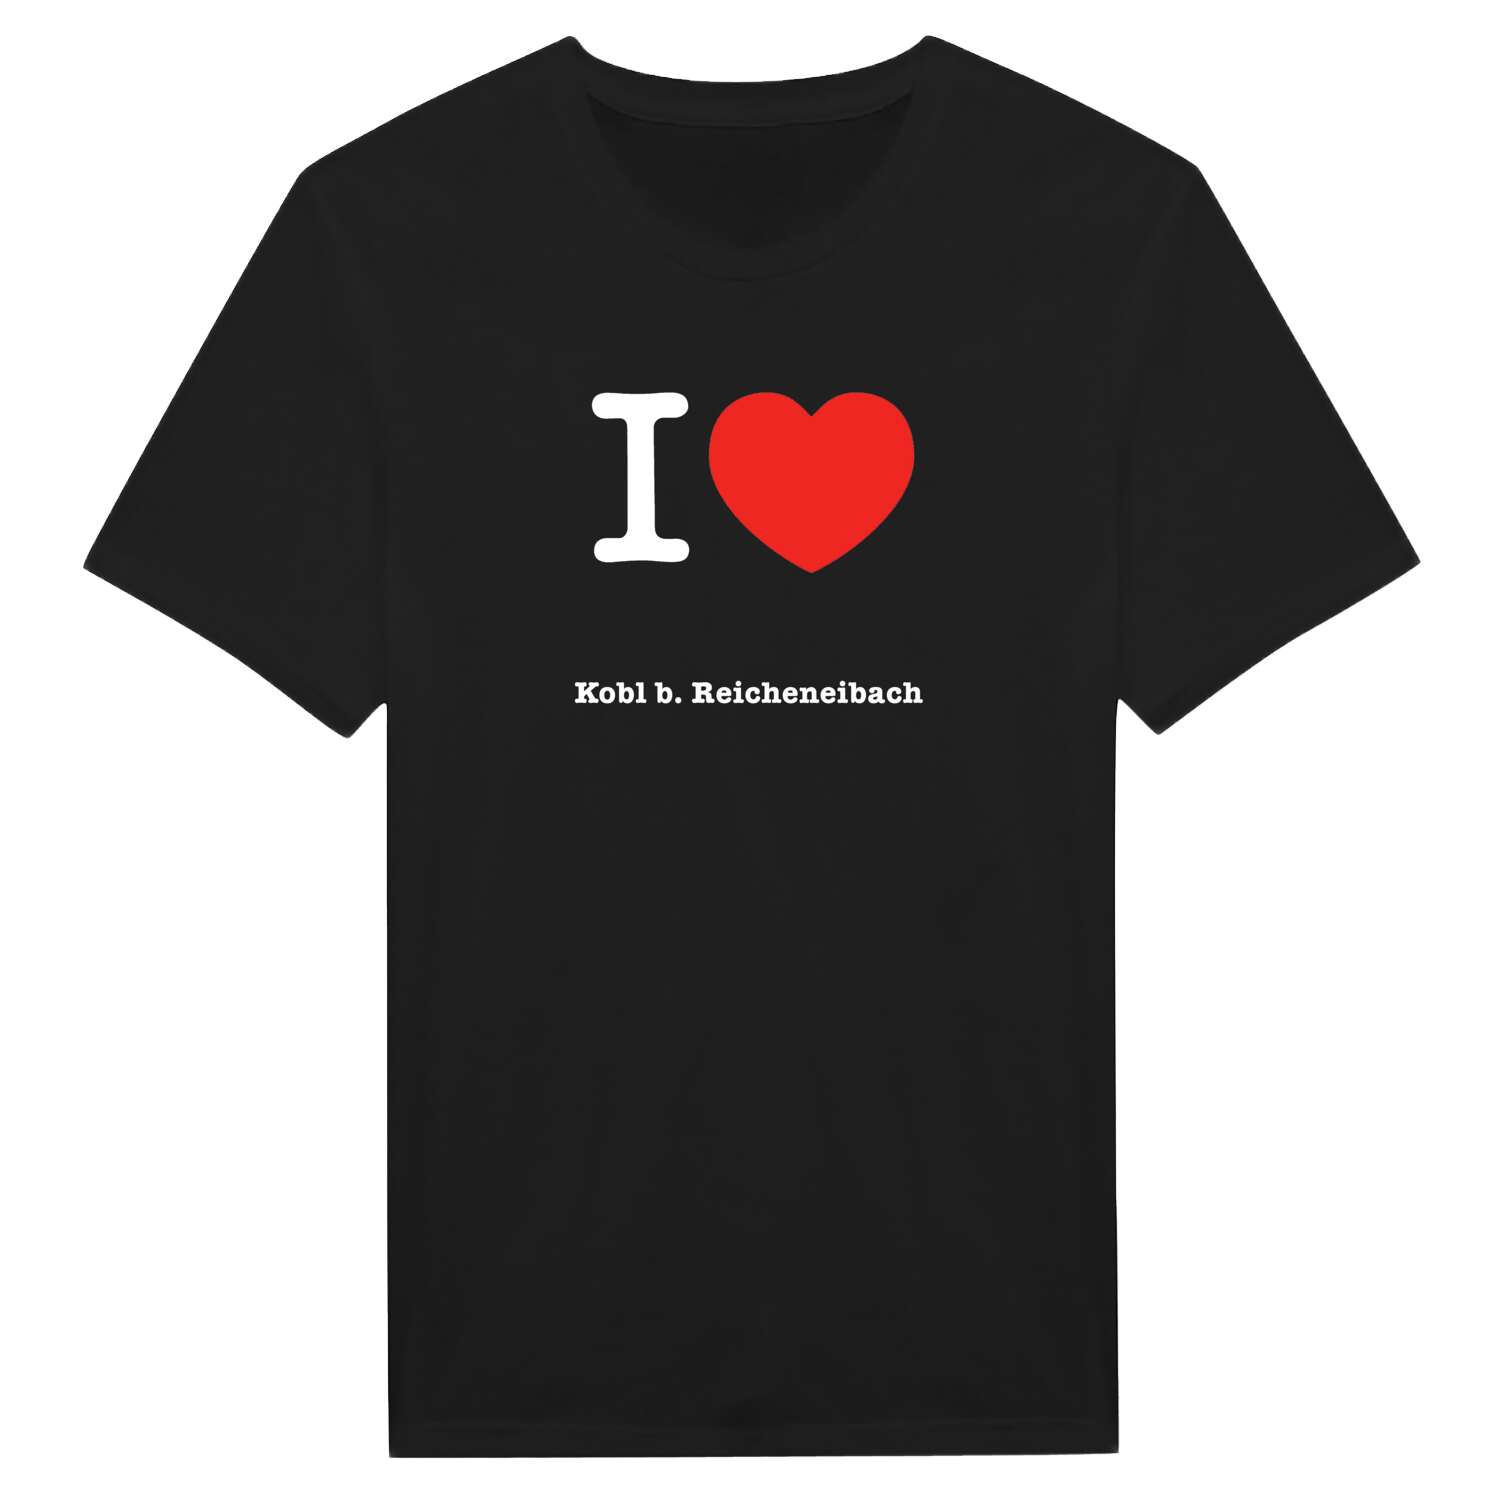 Kobl b. Reicheneibach T-Shirt »I love«